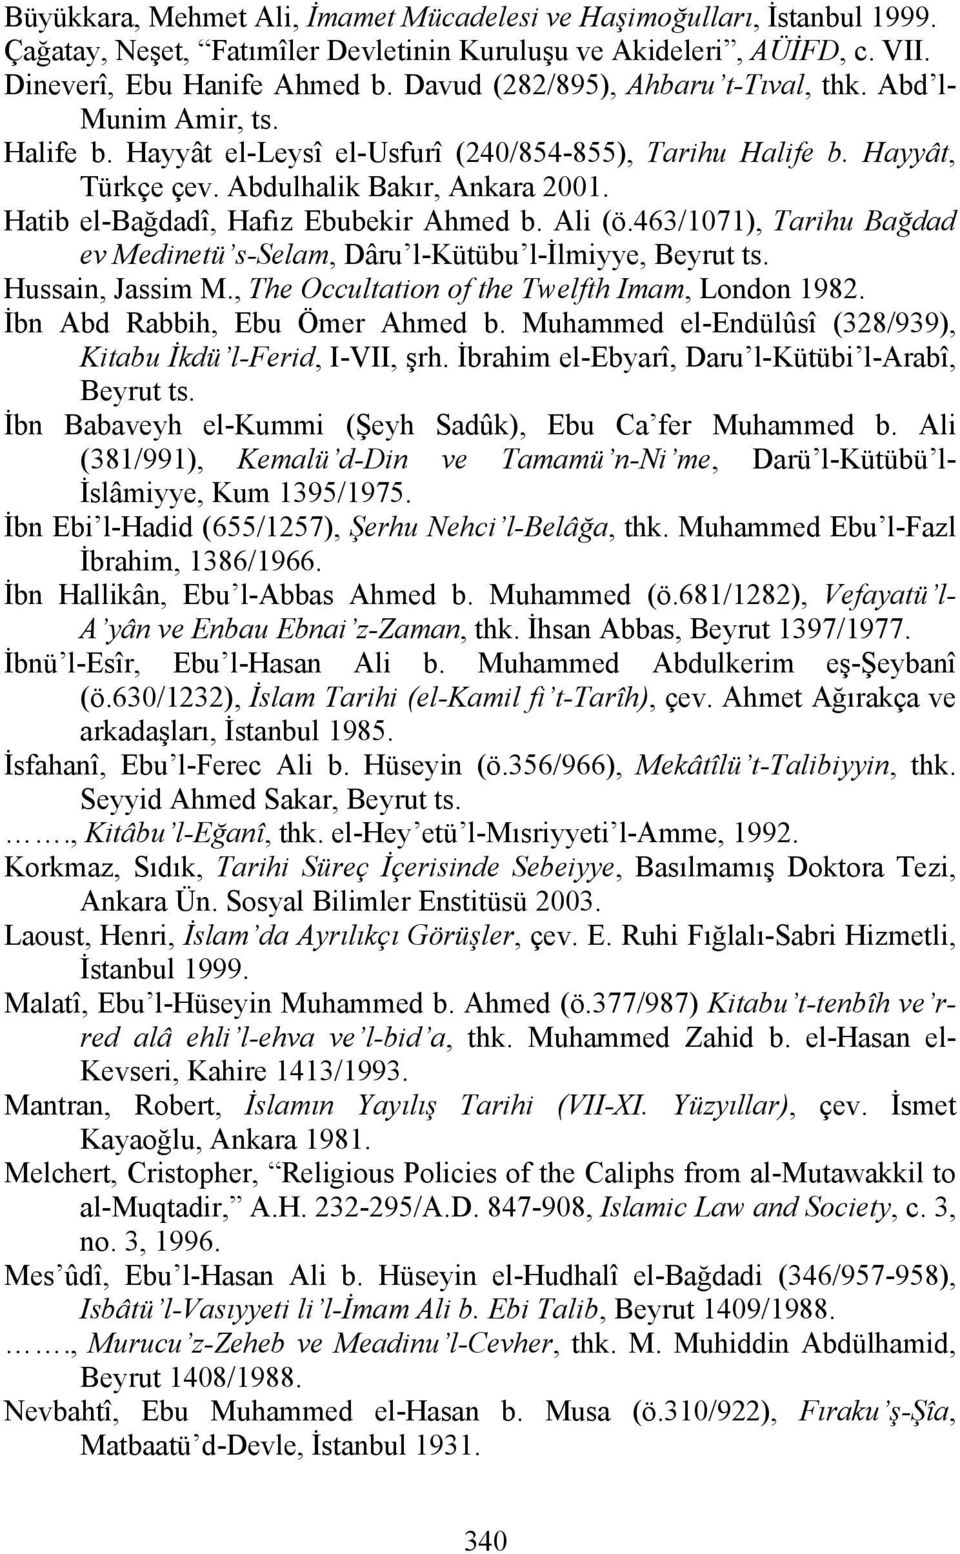 Hatib el-bağdadî, Hafız Ebubekir Ahmed b. Ali (ö.463/1071), Tarihu Bağdad ev Medinetü s-selam, Dâru l-kütübu l-ilmiyye, Beyrut ts. Hussain, Jassim M., The Occultation of the Twelfth Imam, London 1982.